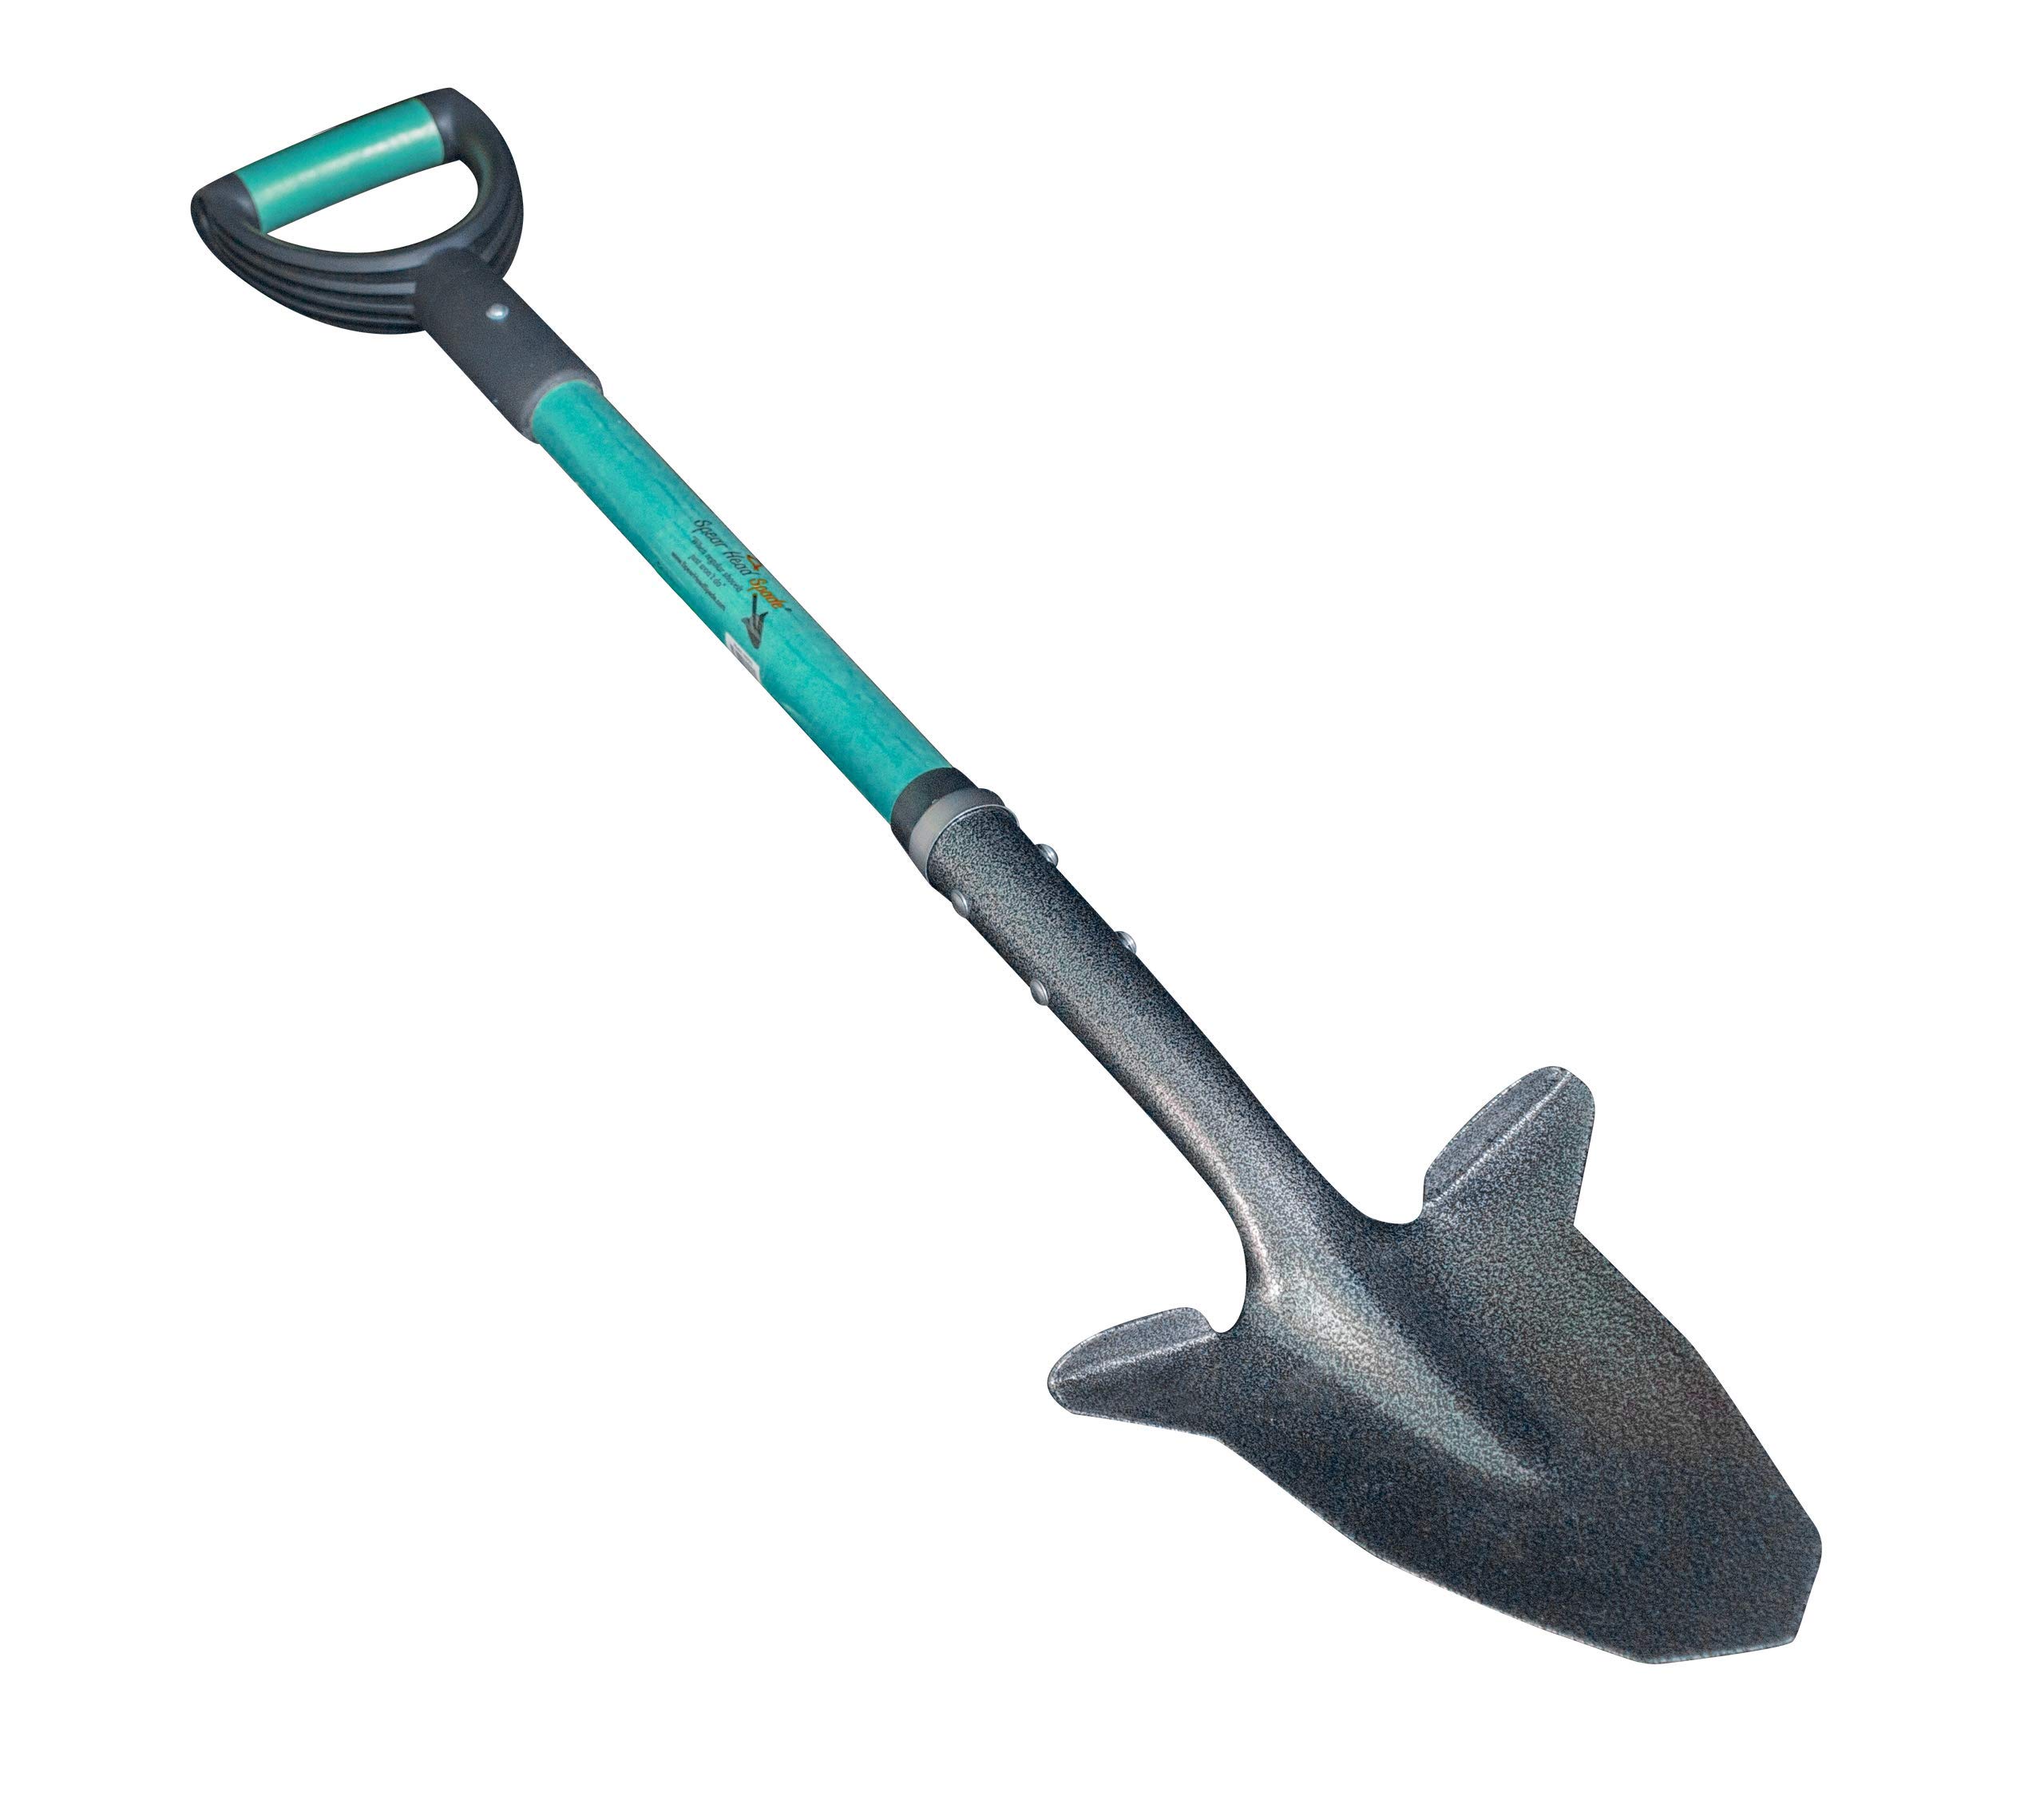 Spear Head Spade Gardening Shovel with Steel-Reinforced Fiberglass Handle Cushioned D-Grip and Sharp Hardened-Steel Blade